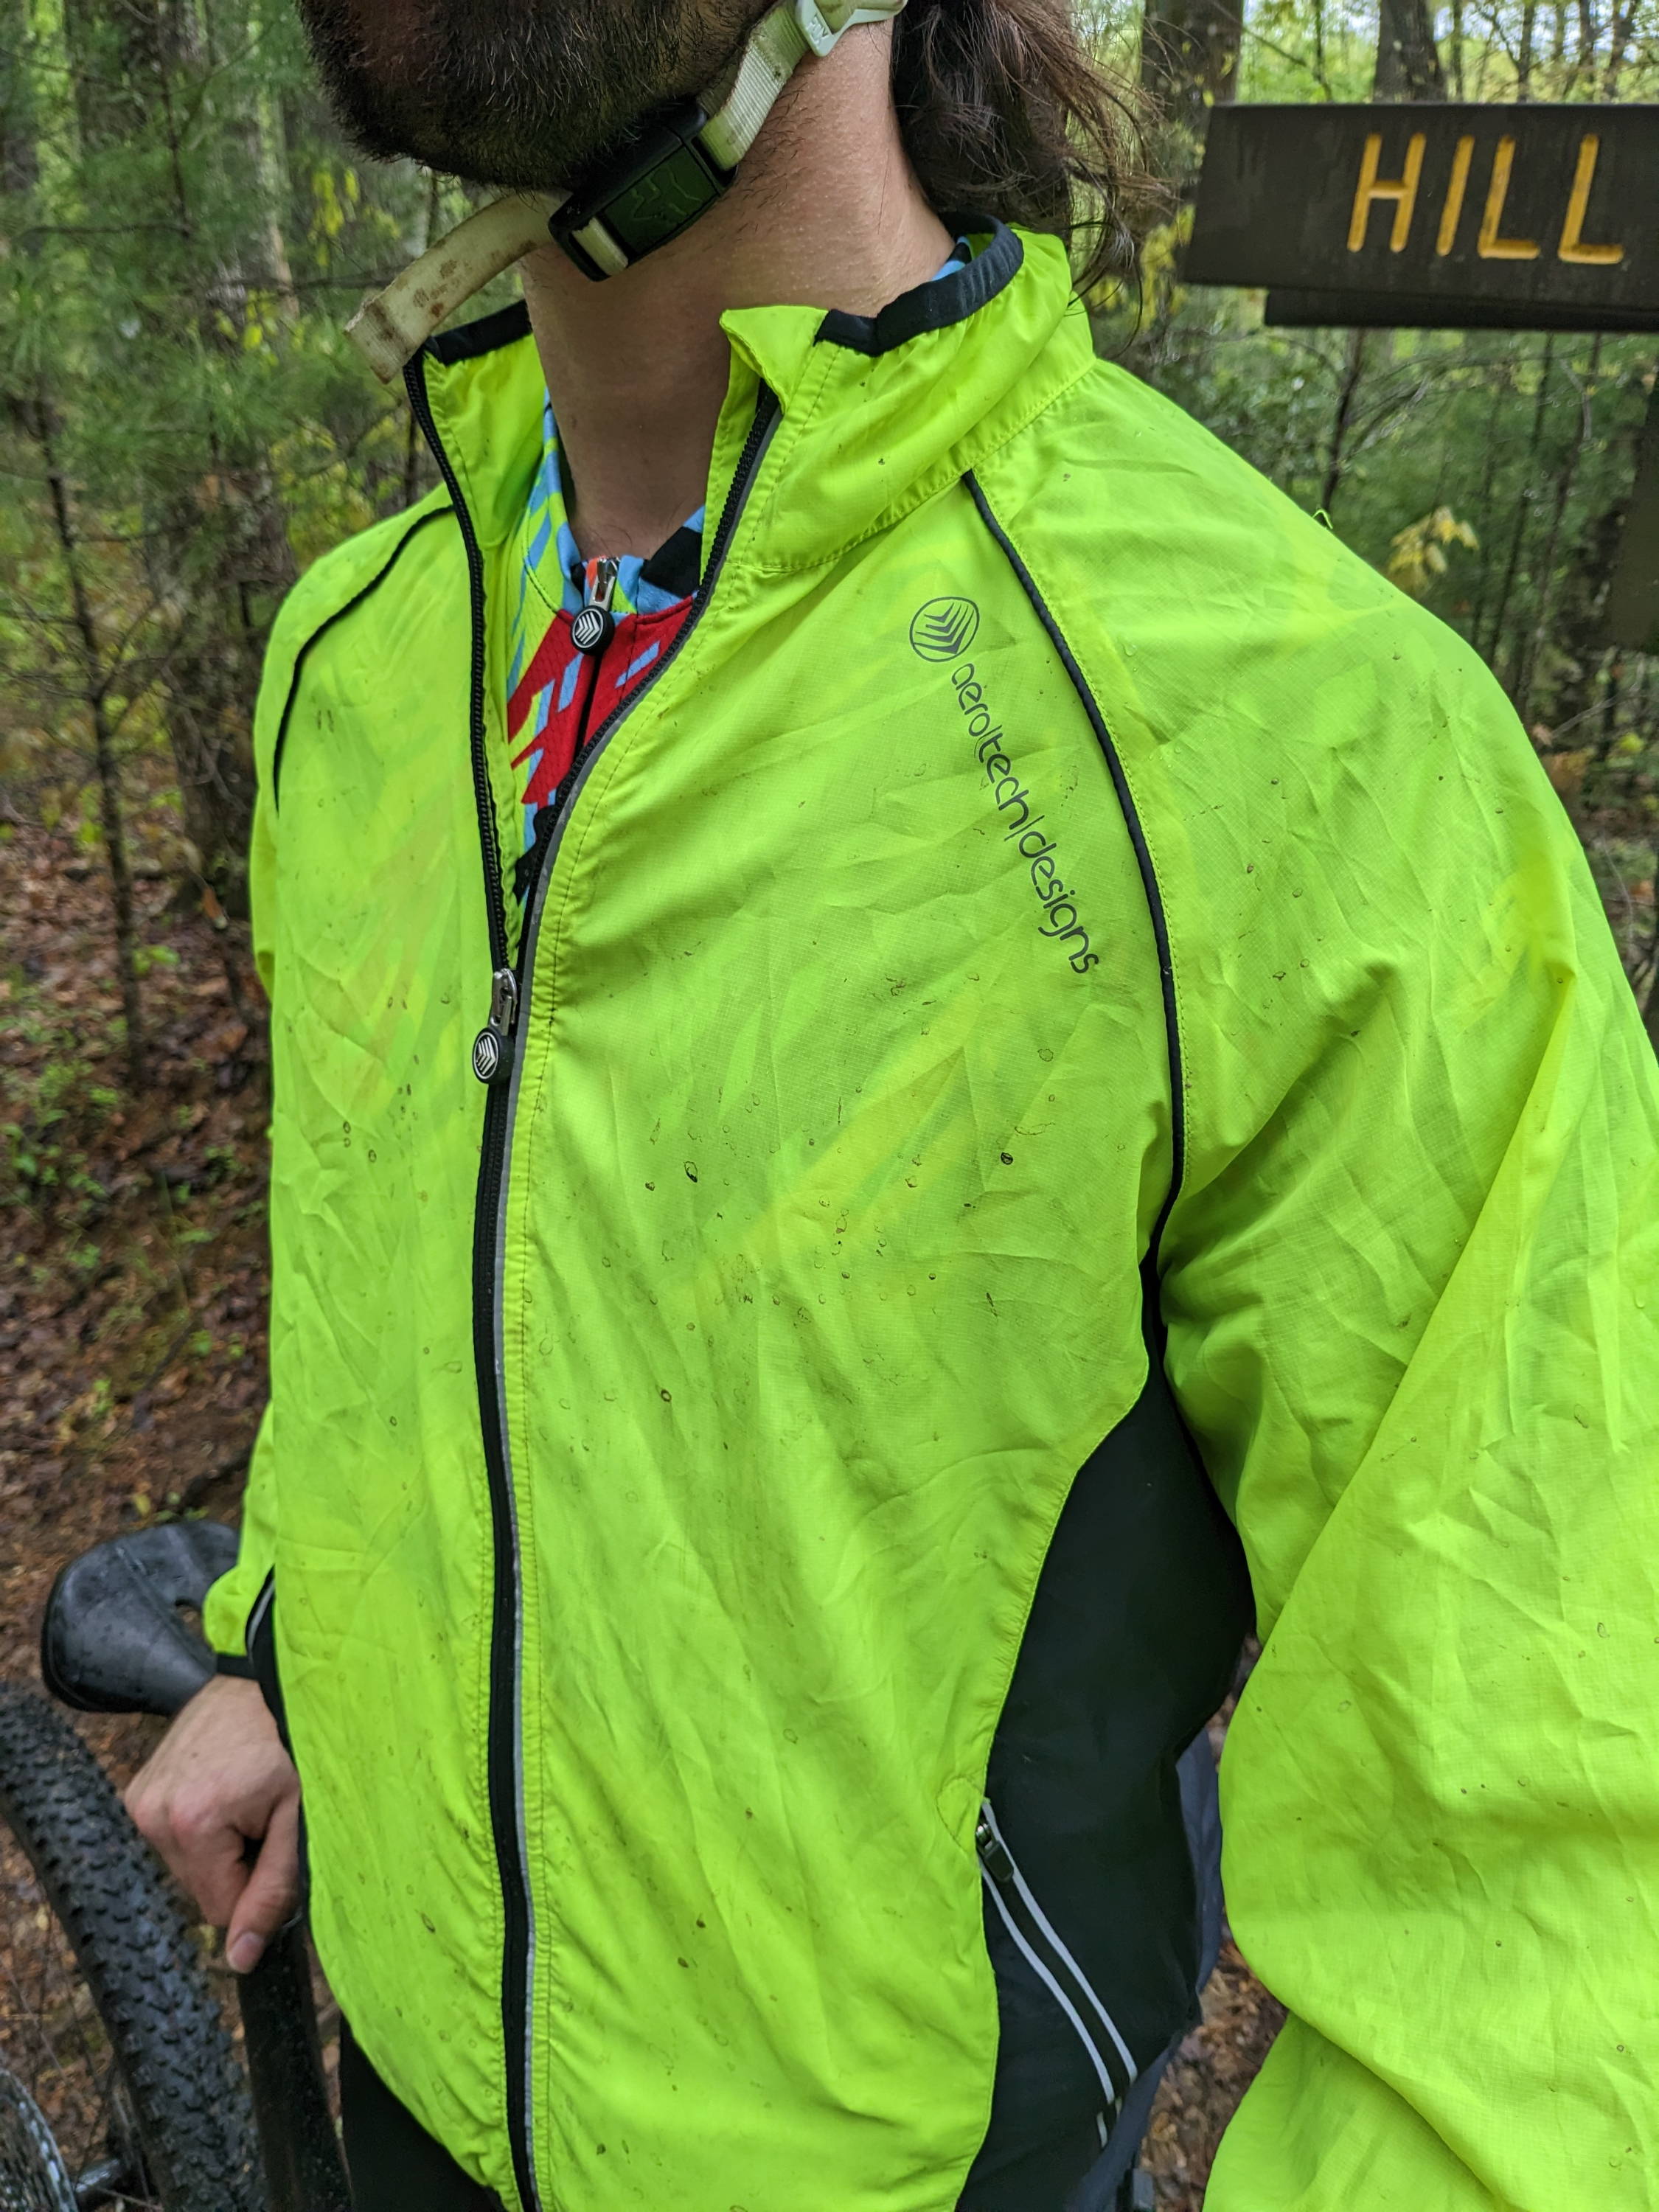 Cycling in an Aero Tech Designs jacket.  Mud on it.